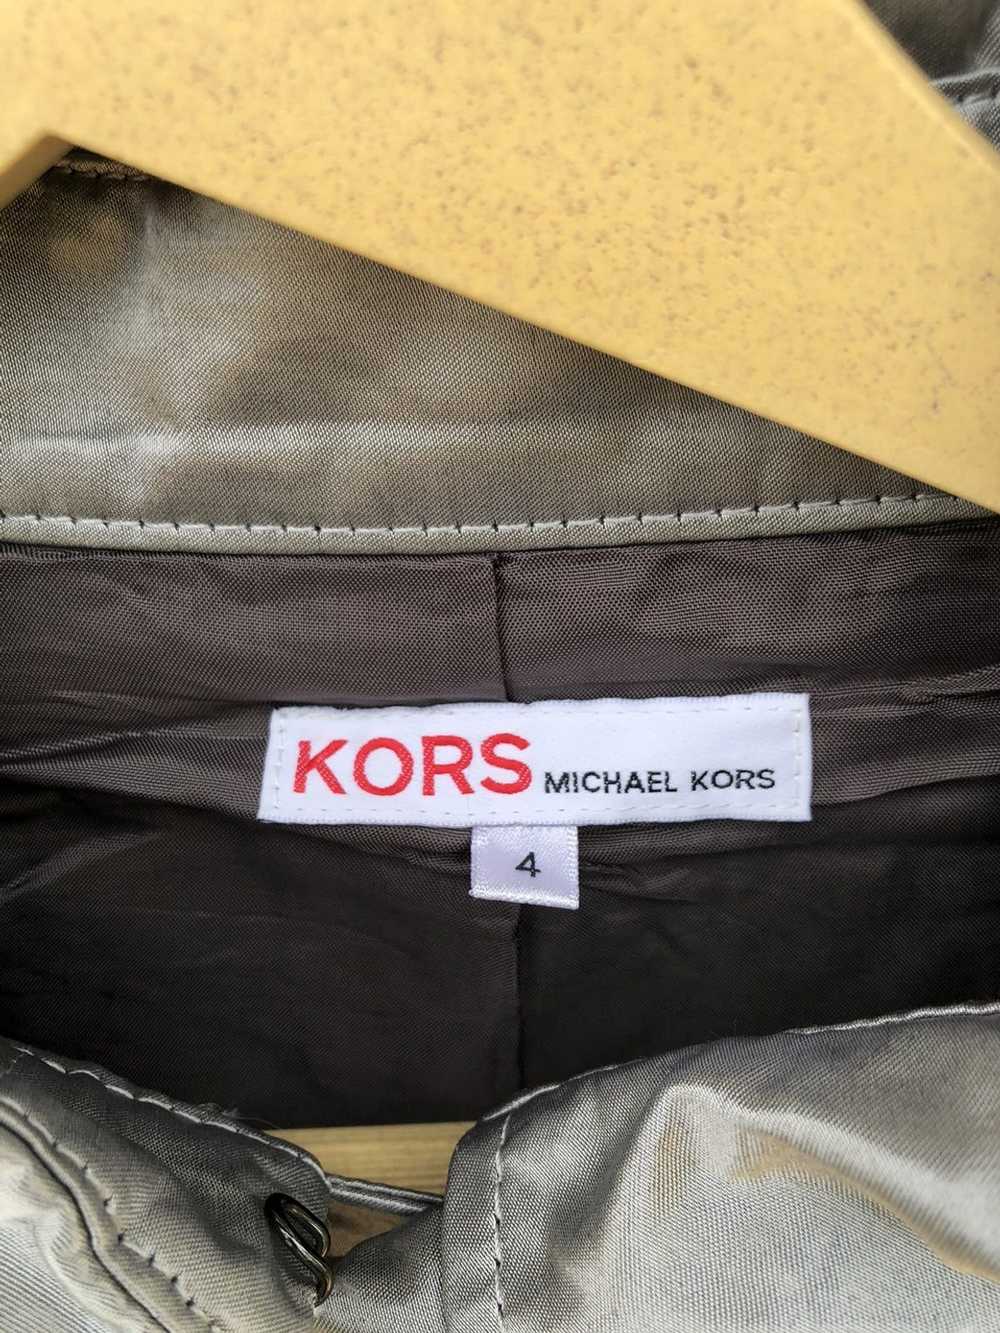 Michael Kors Micheal Kors Raincoat Ladies - image 5